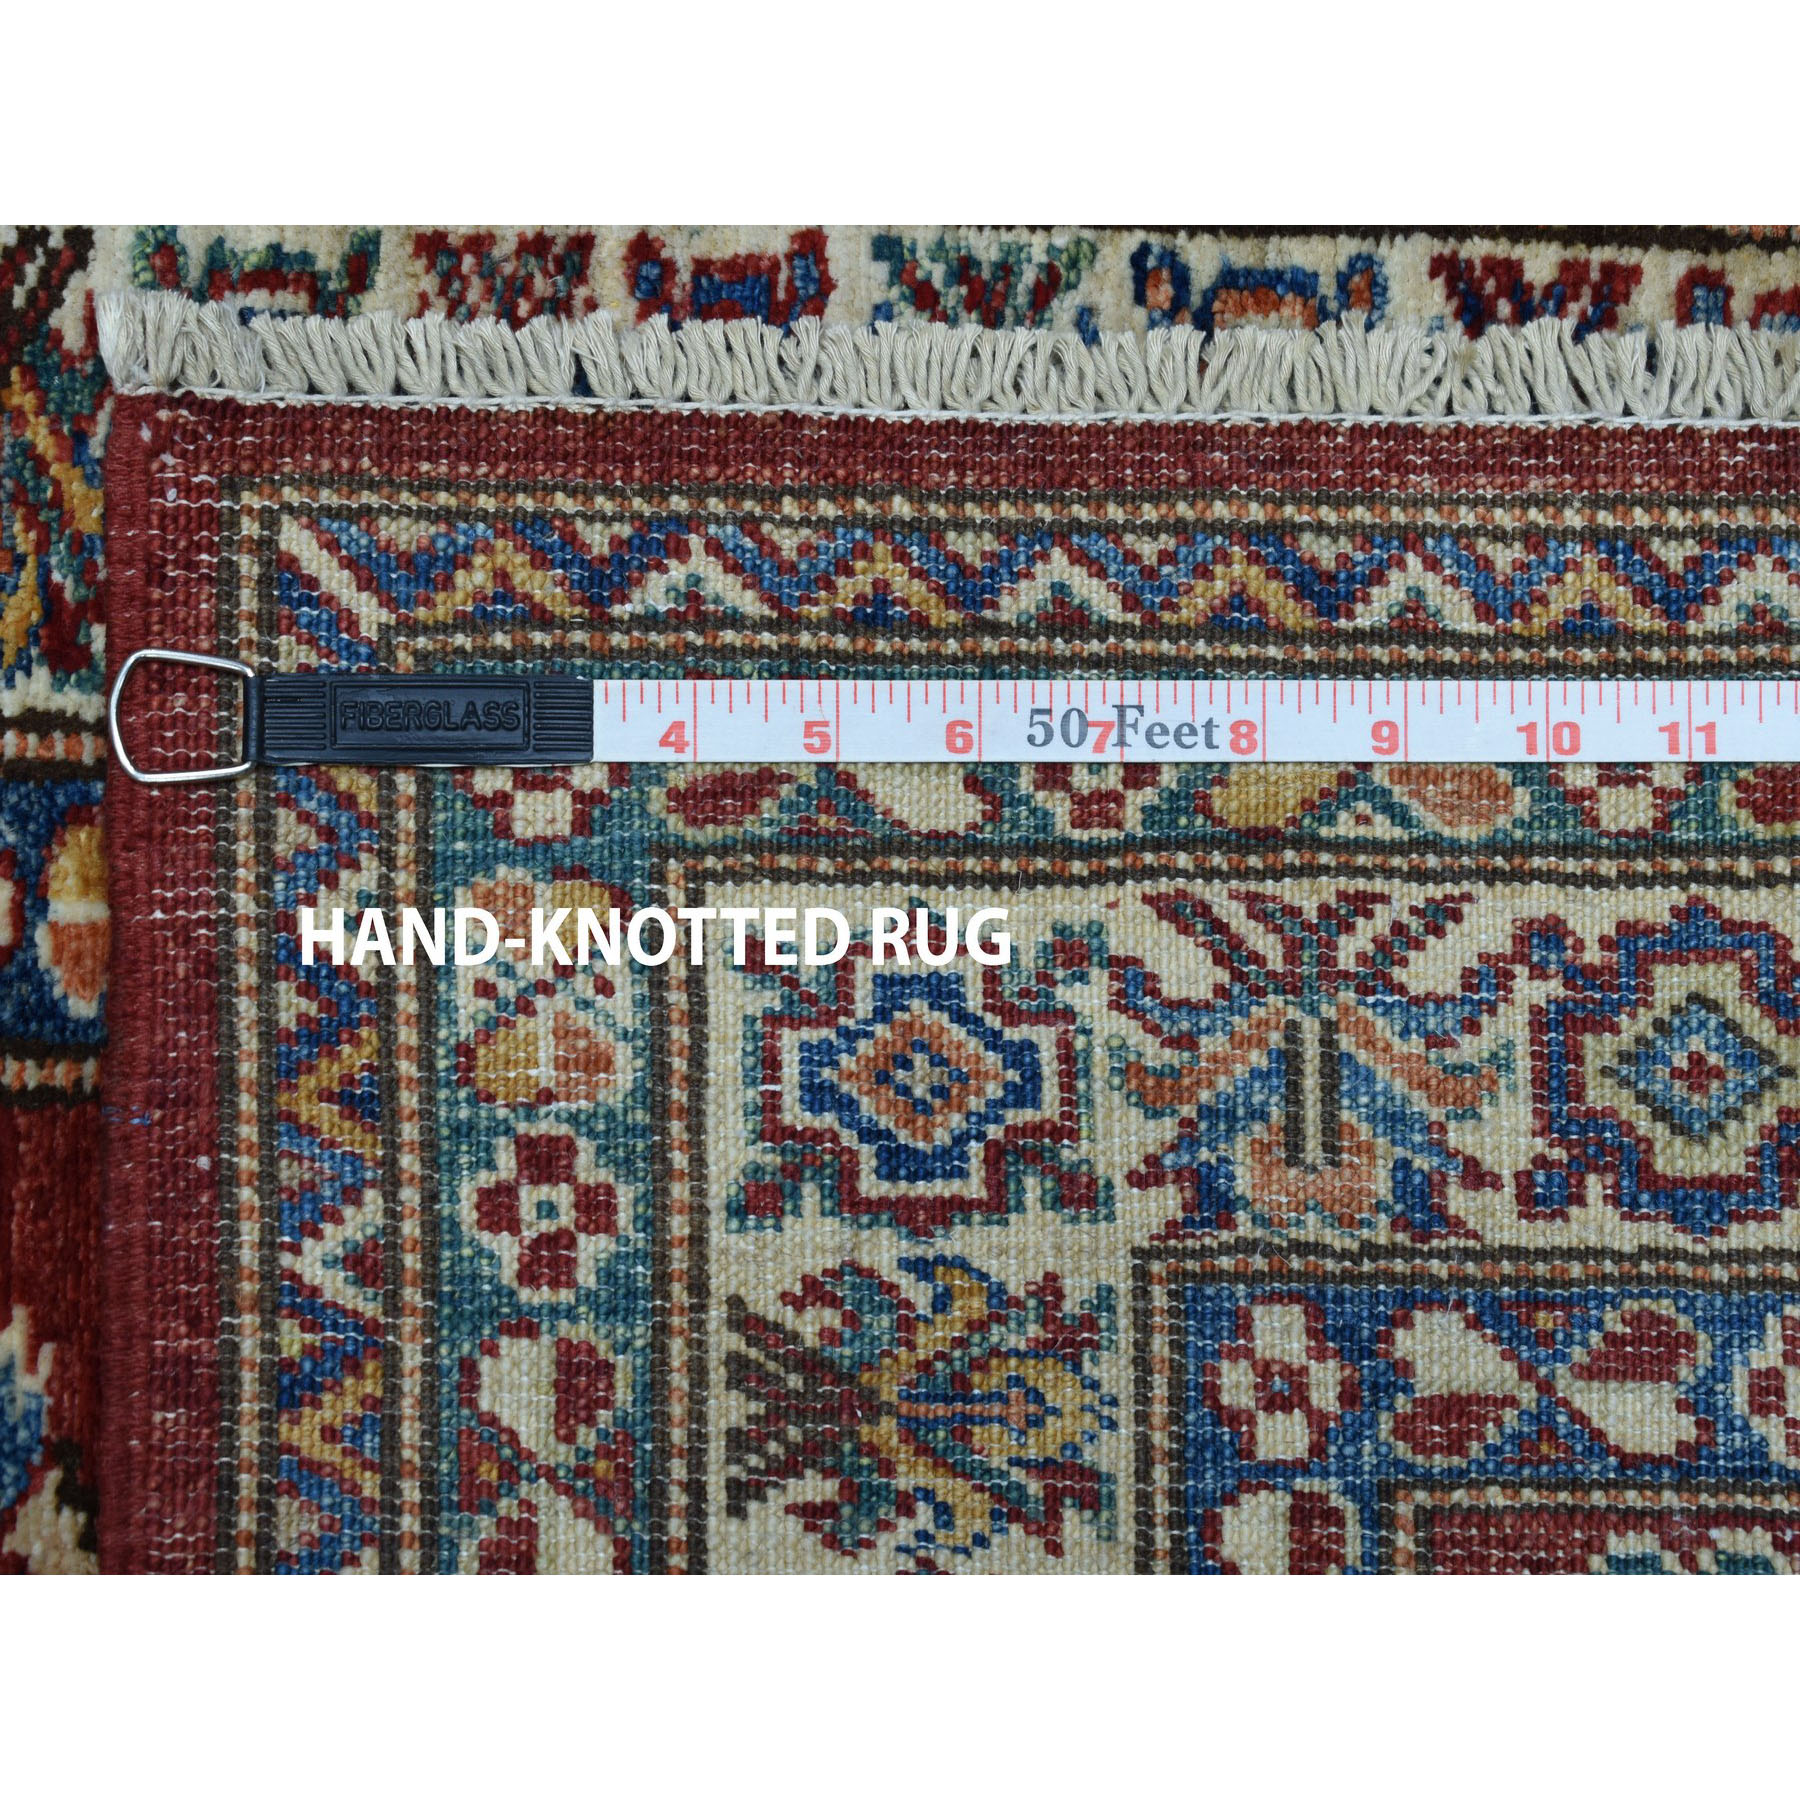 2-10 x13-9  Red Super Kazak Pure Wool Geometric Design Hand-Knotted Runner Oriental Rug 